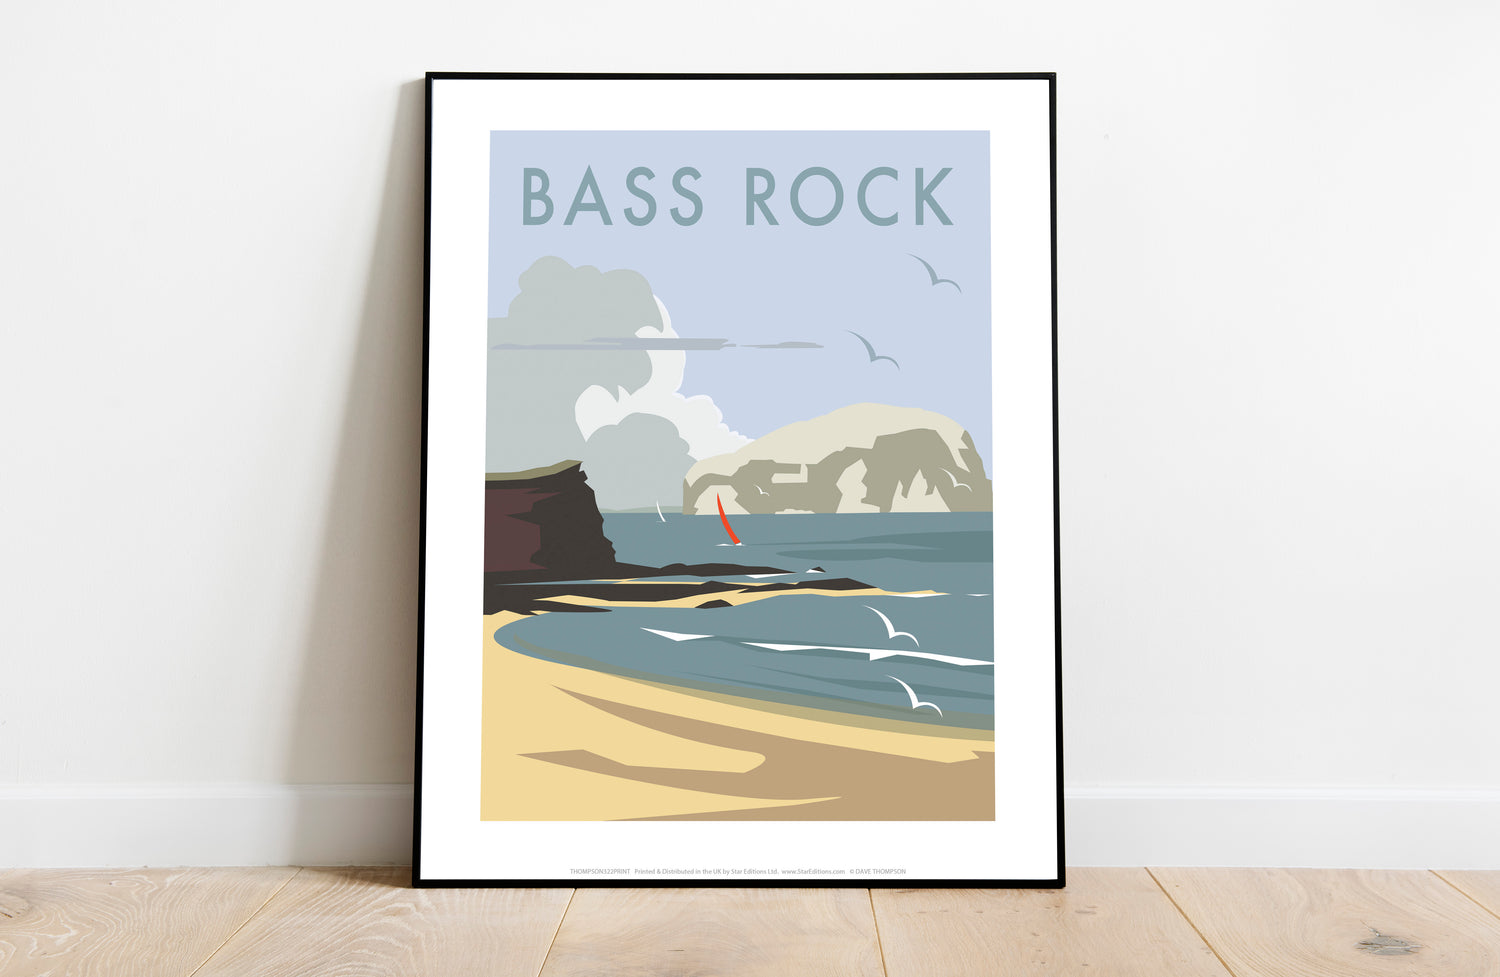 Bass Rock, North Berwick - Art Print